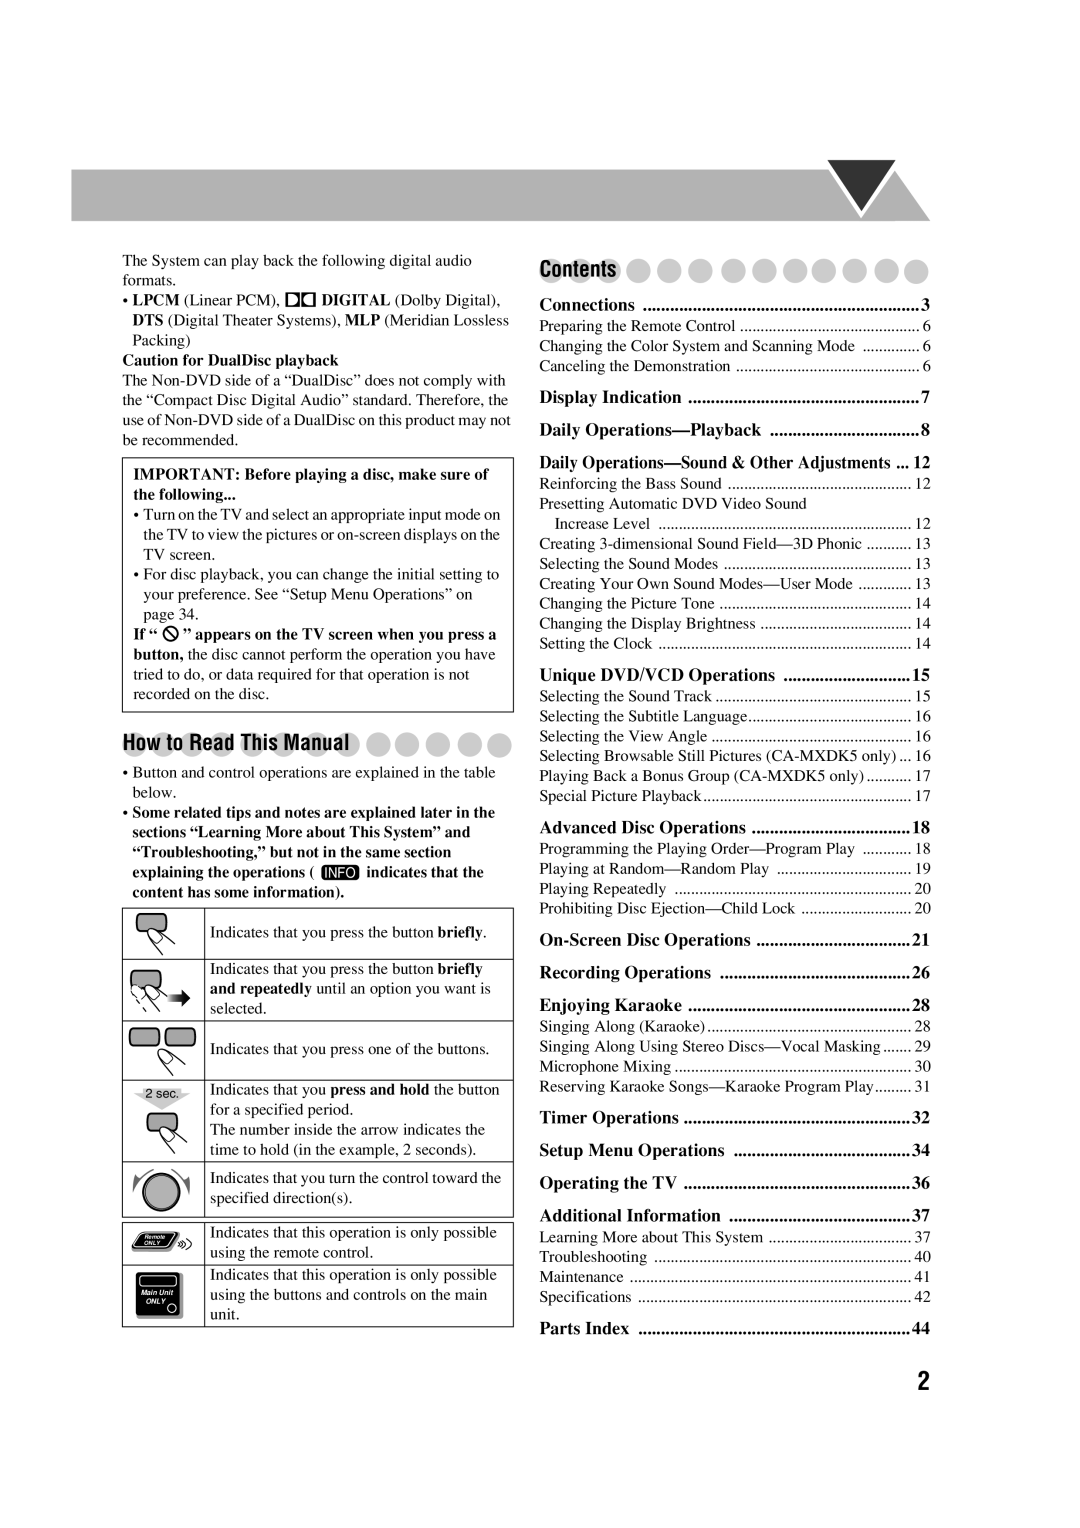 JVC MX-DK3, MX-DK15 manual How to Read This Manual, Contents 